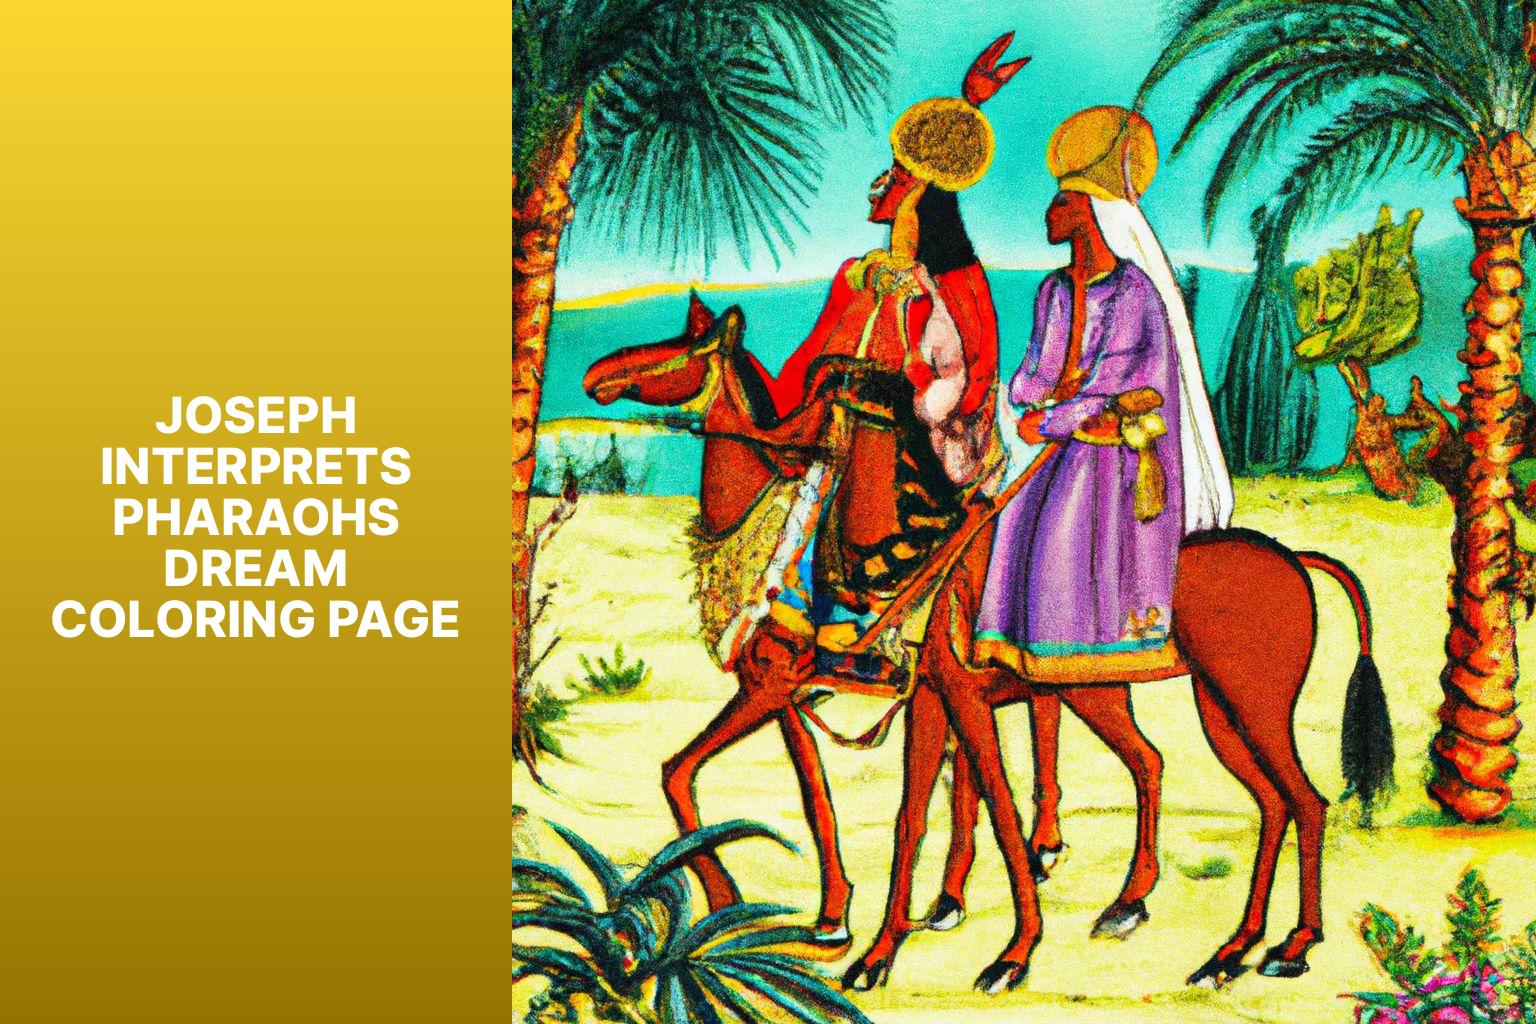 joseph interprets pharaohs dream coloring page